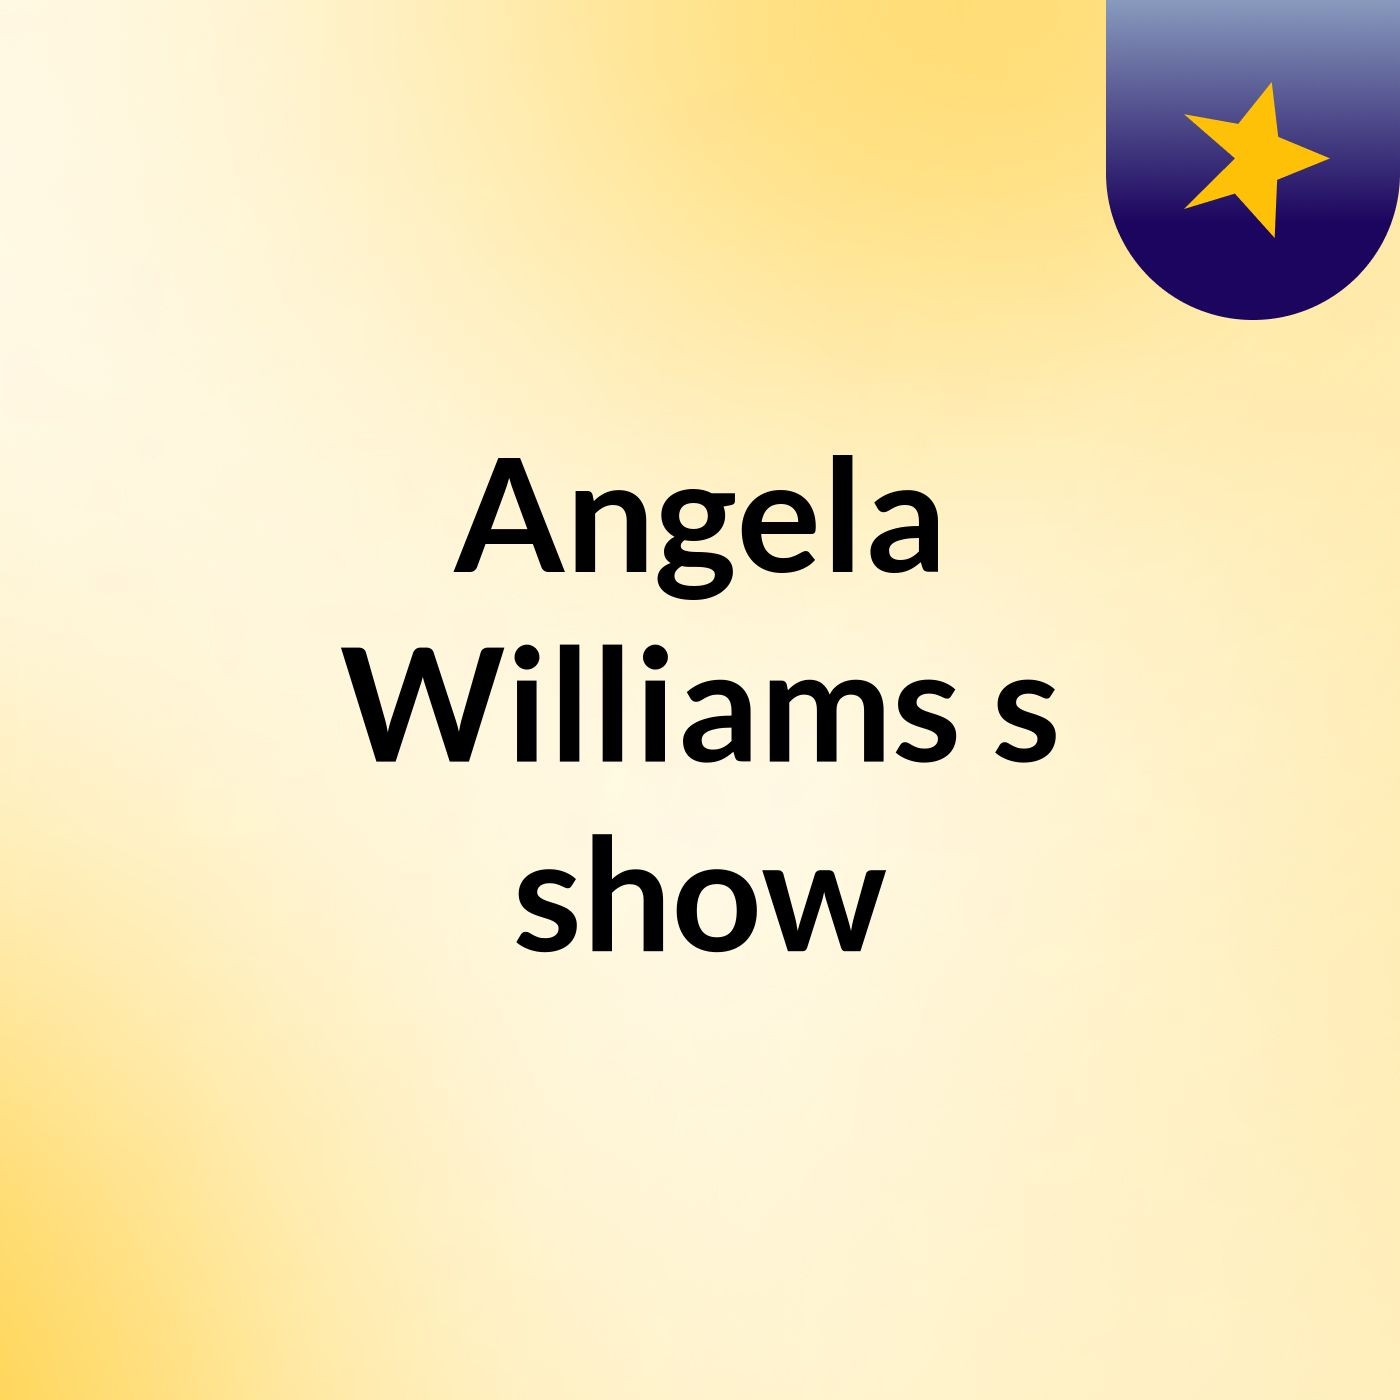 Angela Williams's show